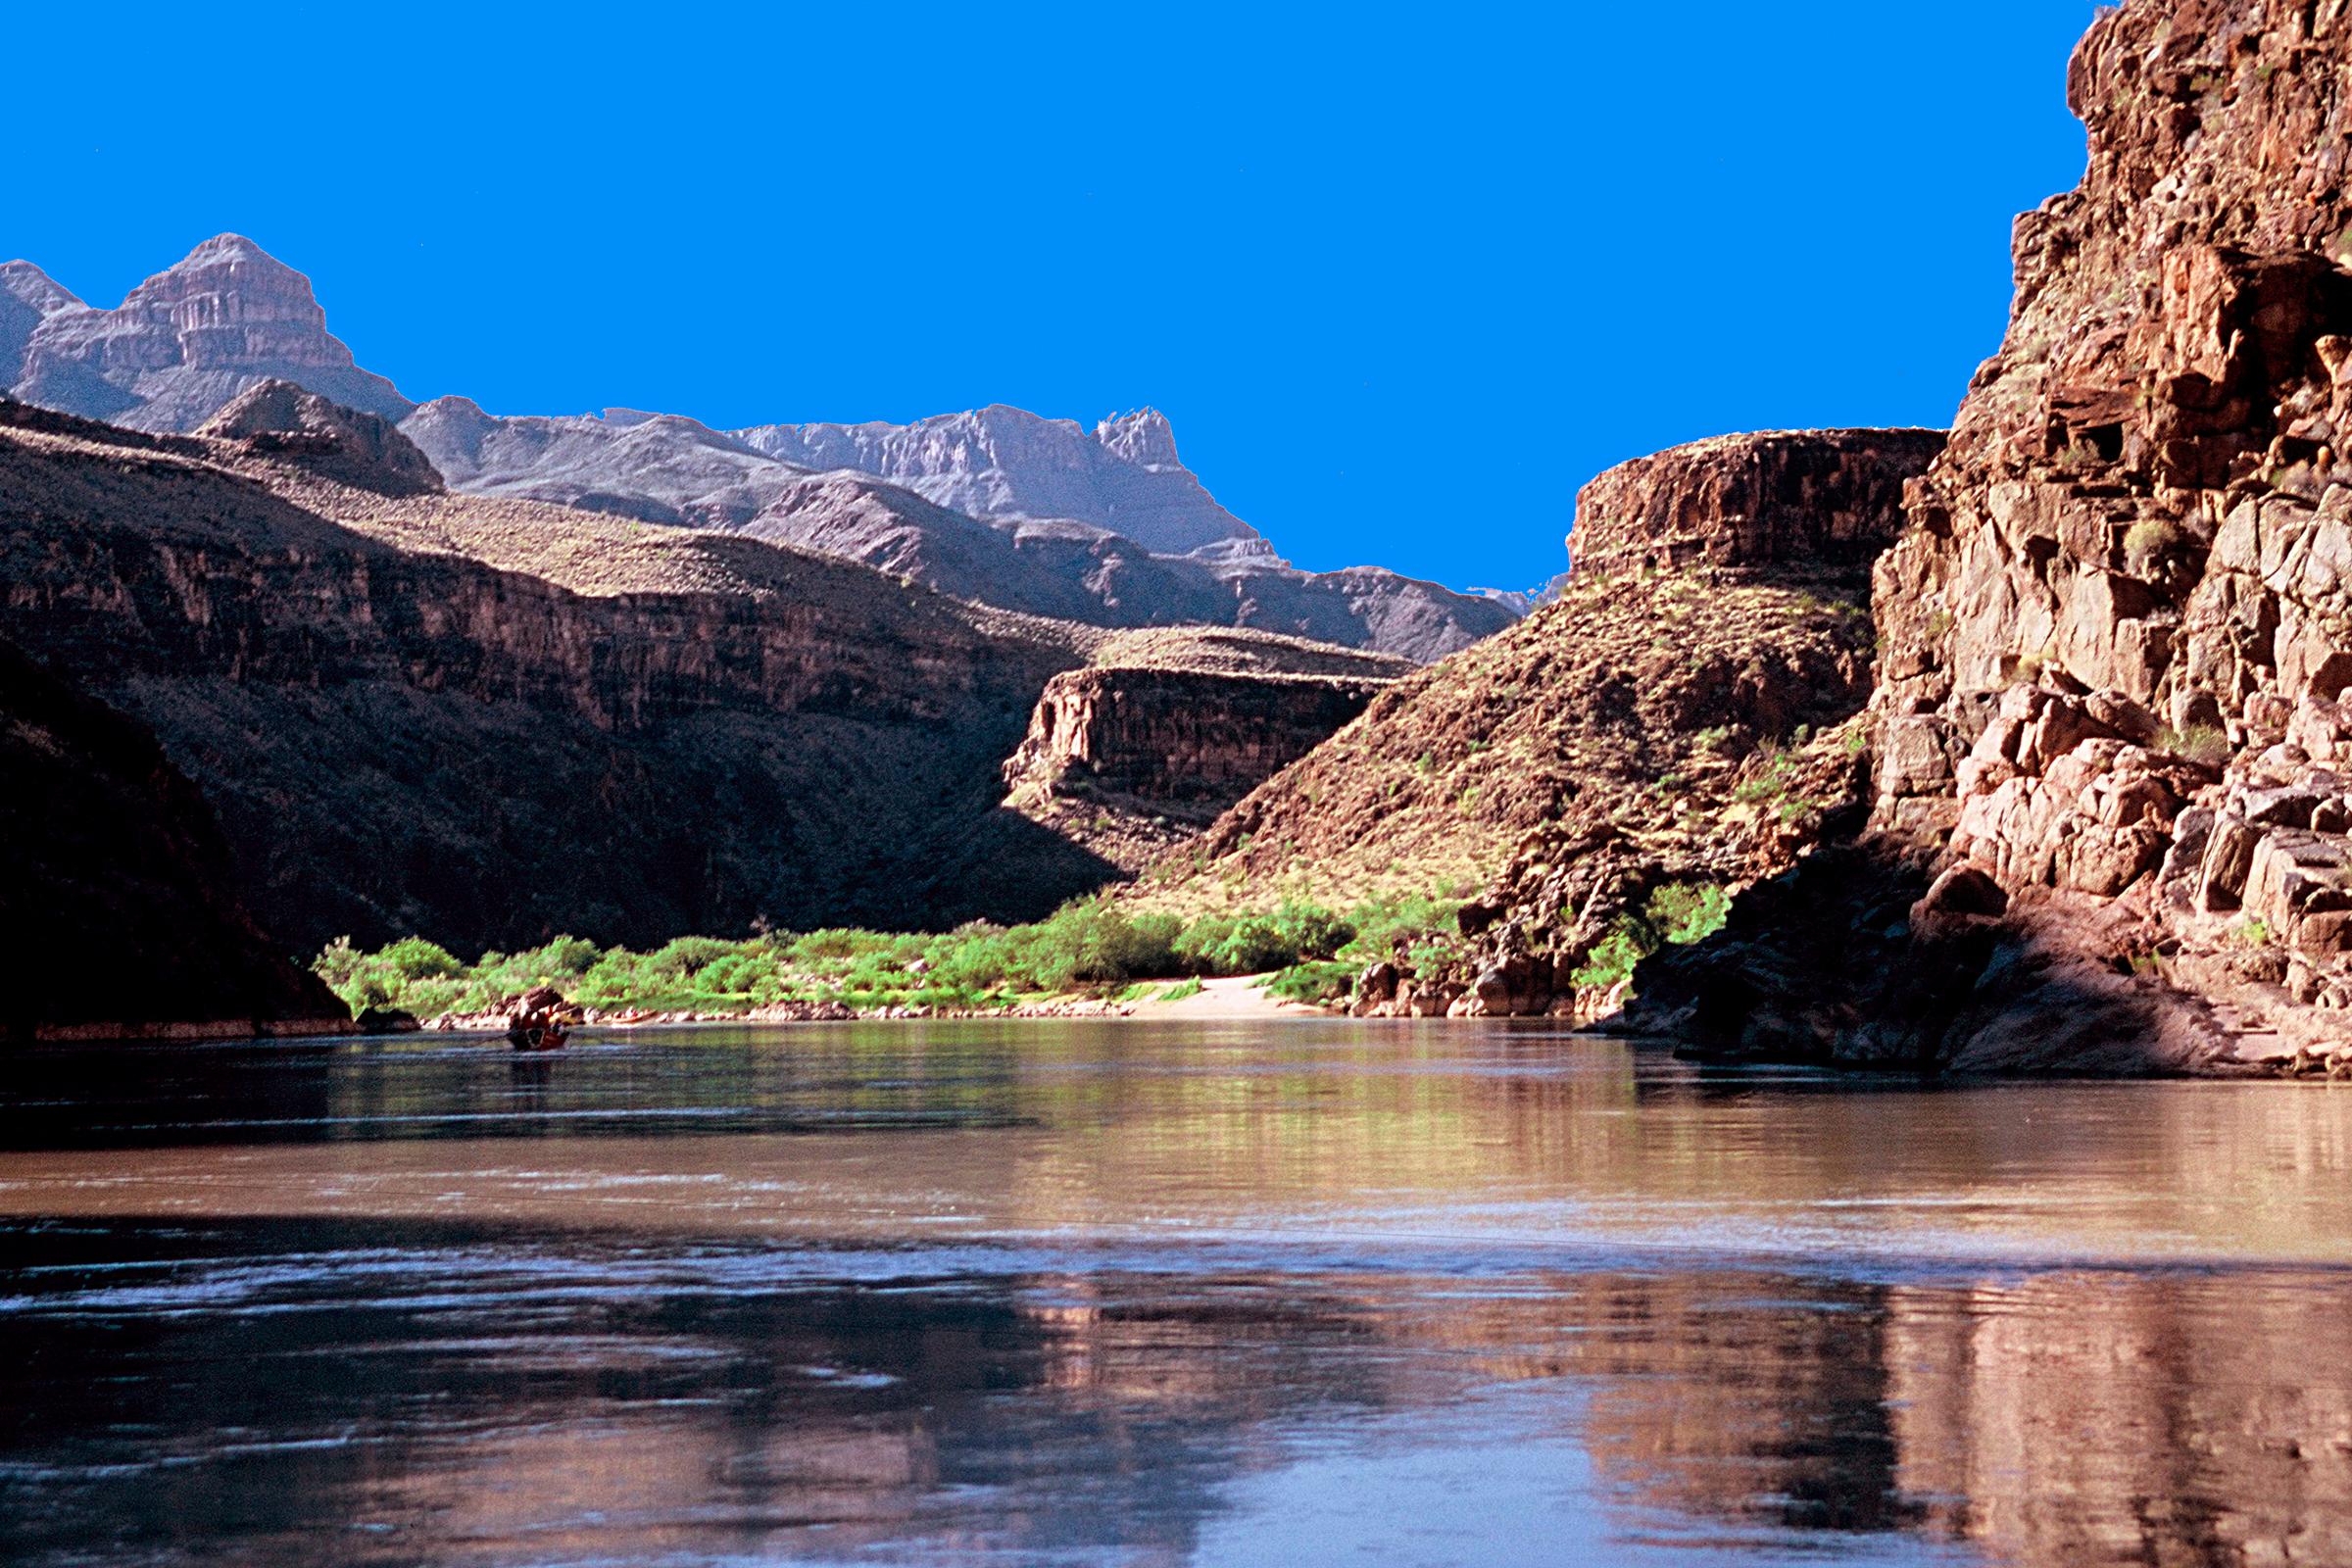 Arizona, Grand Canyon National Park, Colorado River, Still Water Reflections at campsite